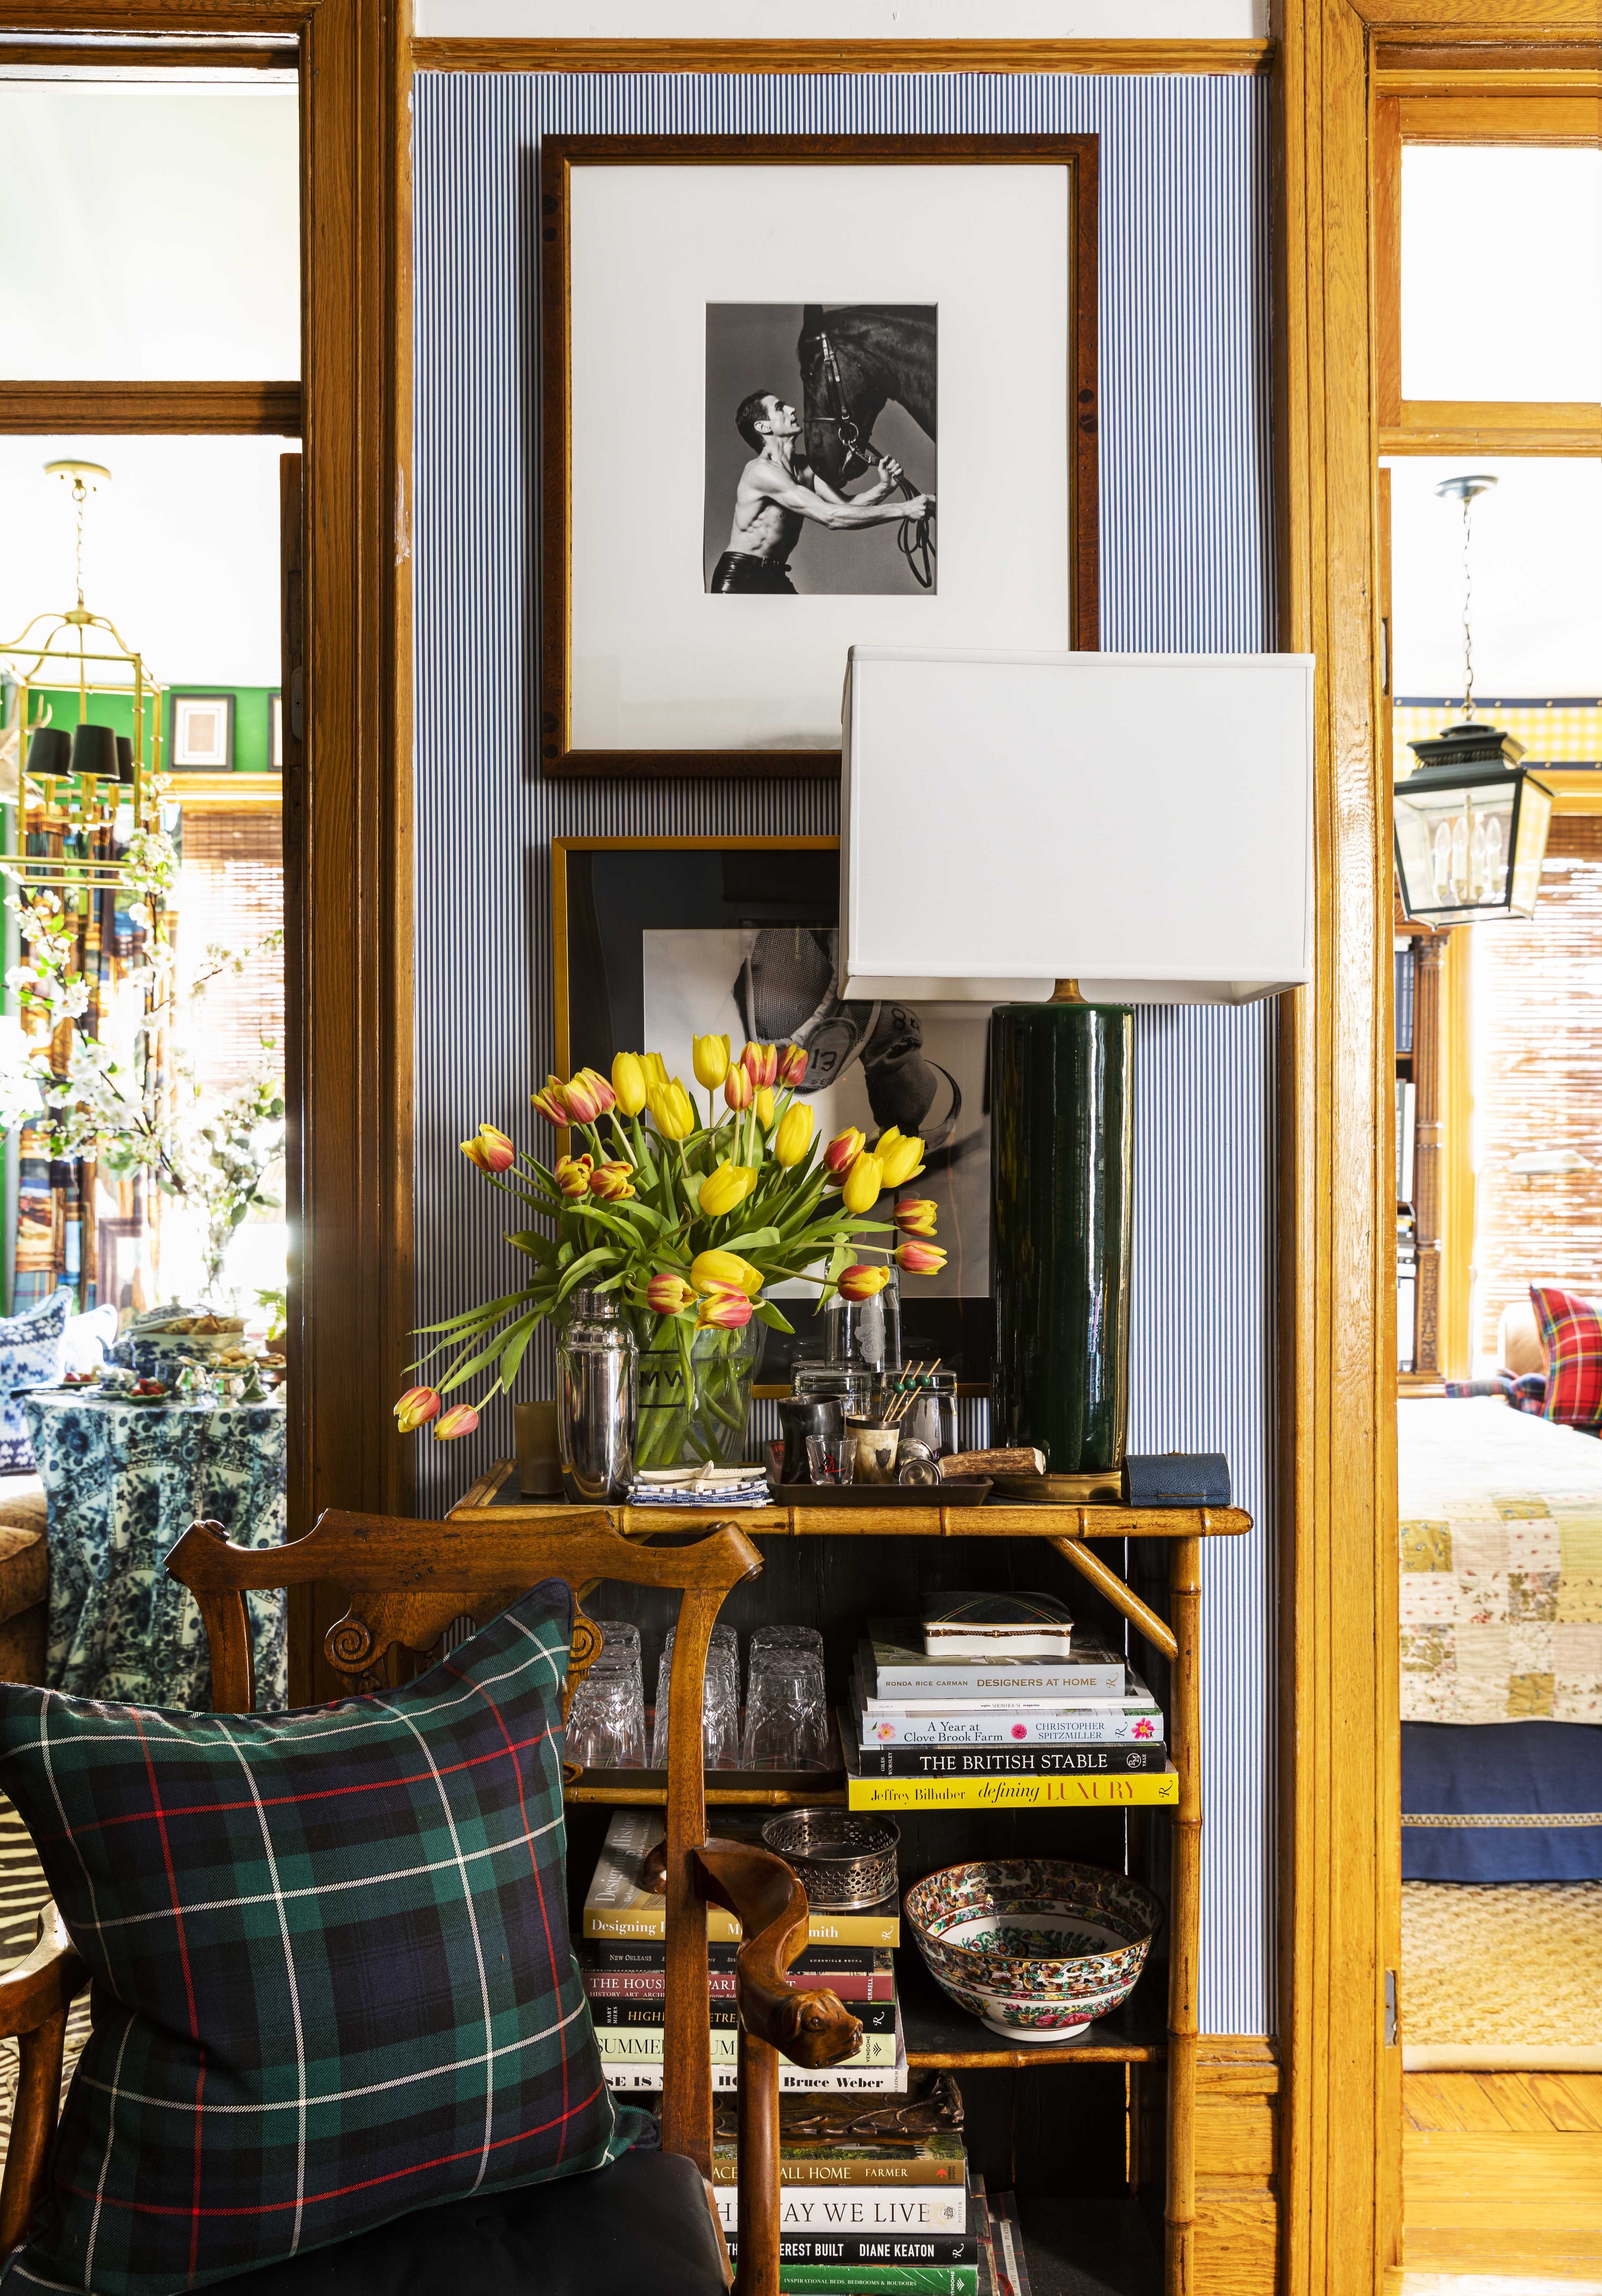 The Inverness Sofa - shown in Blackwatch Tartan – Scot Meacham Wood Home